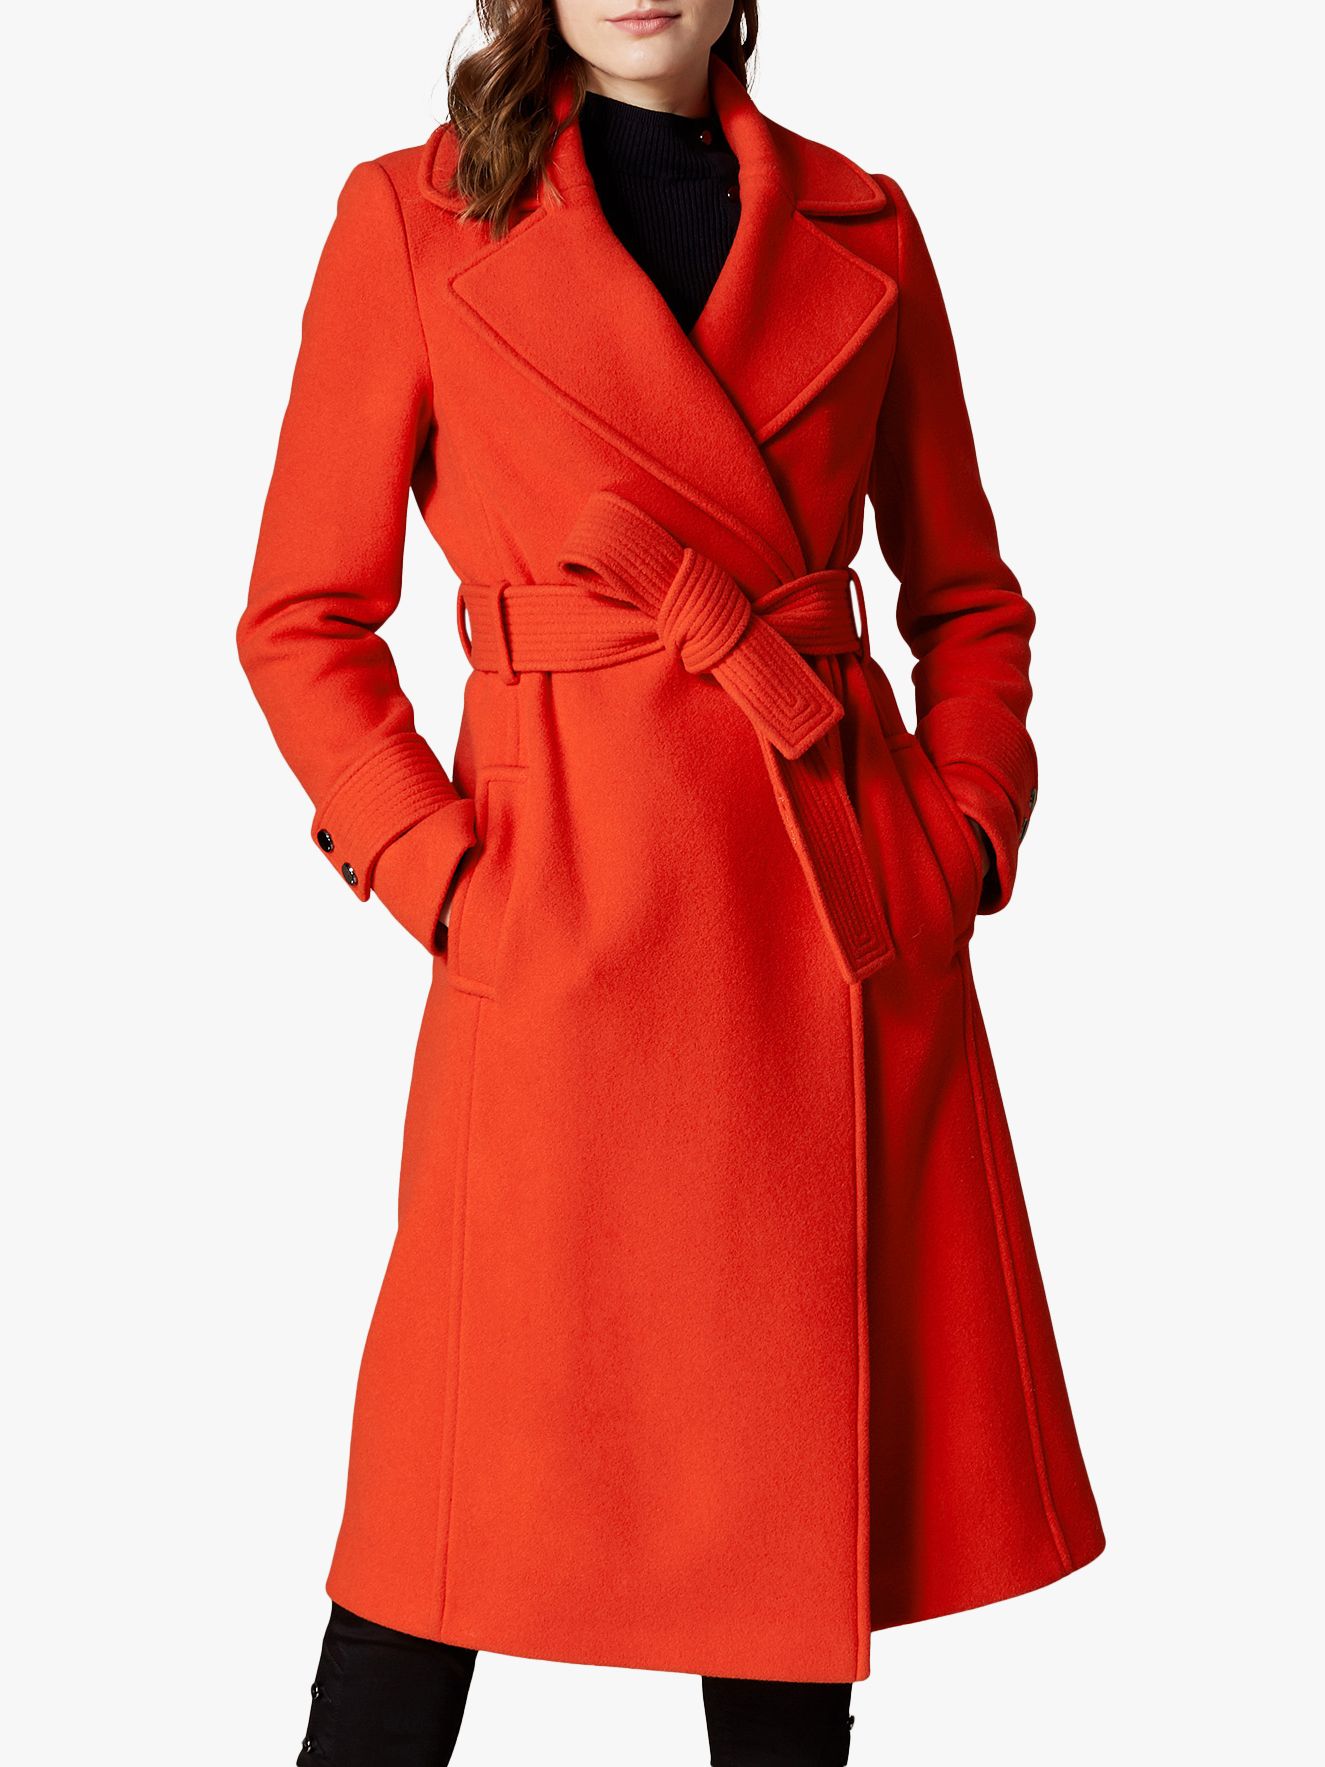 Karen Millen Belted Wrap Coat, Orange at John Lewis & Partners